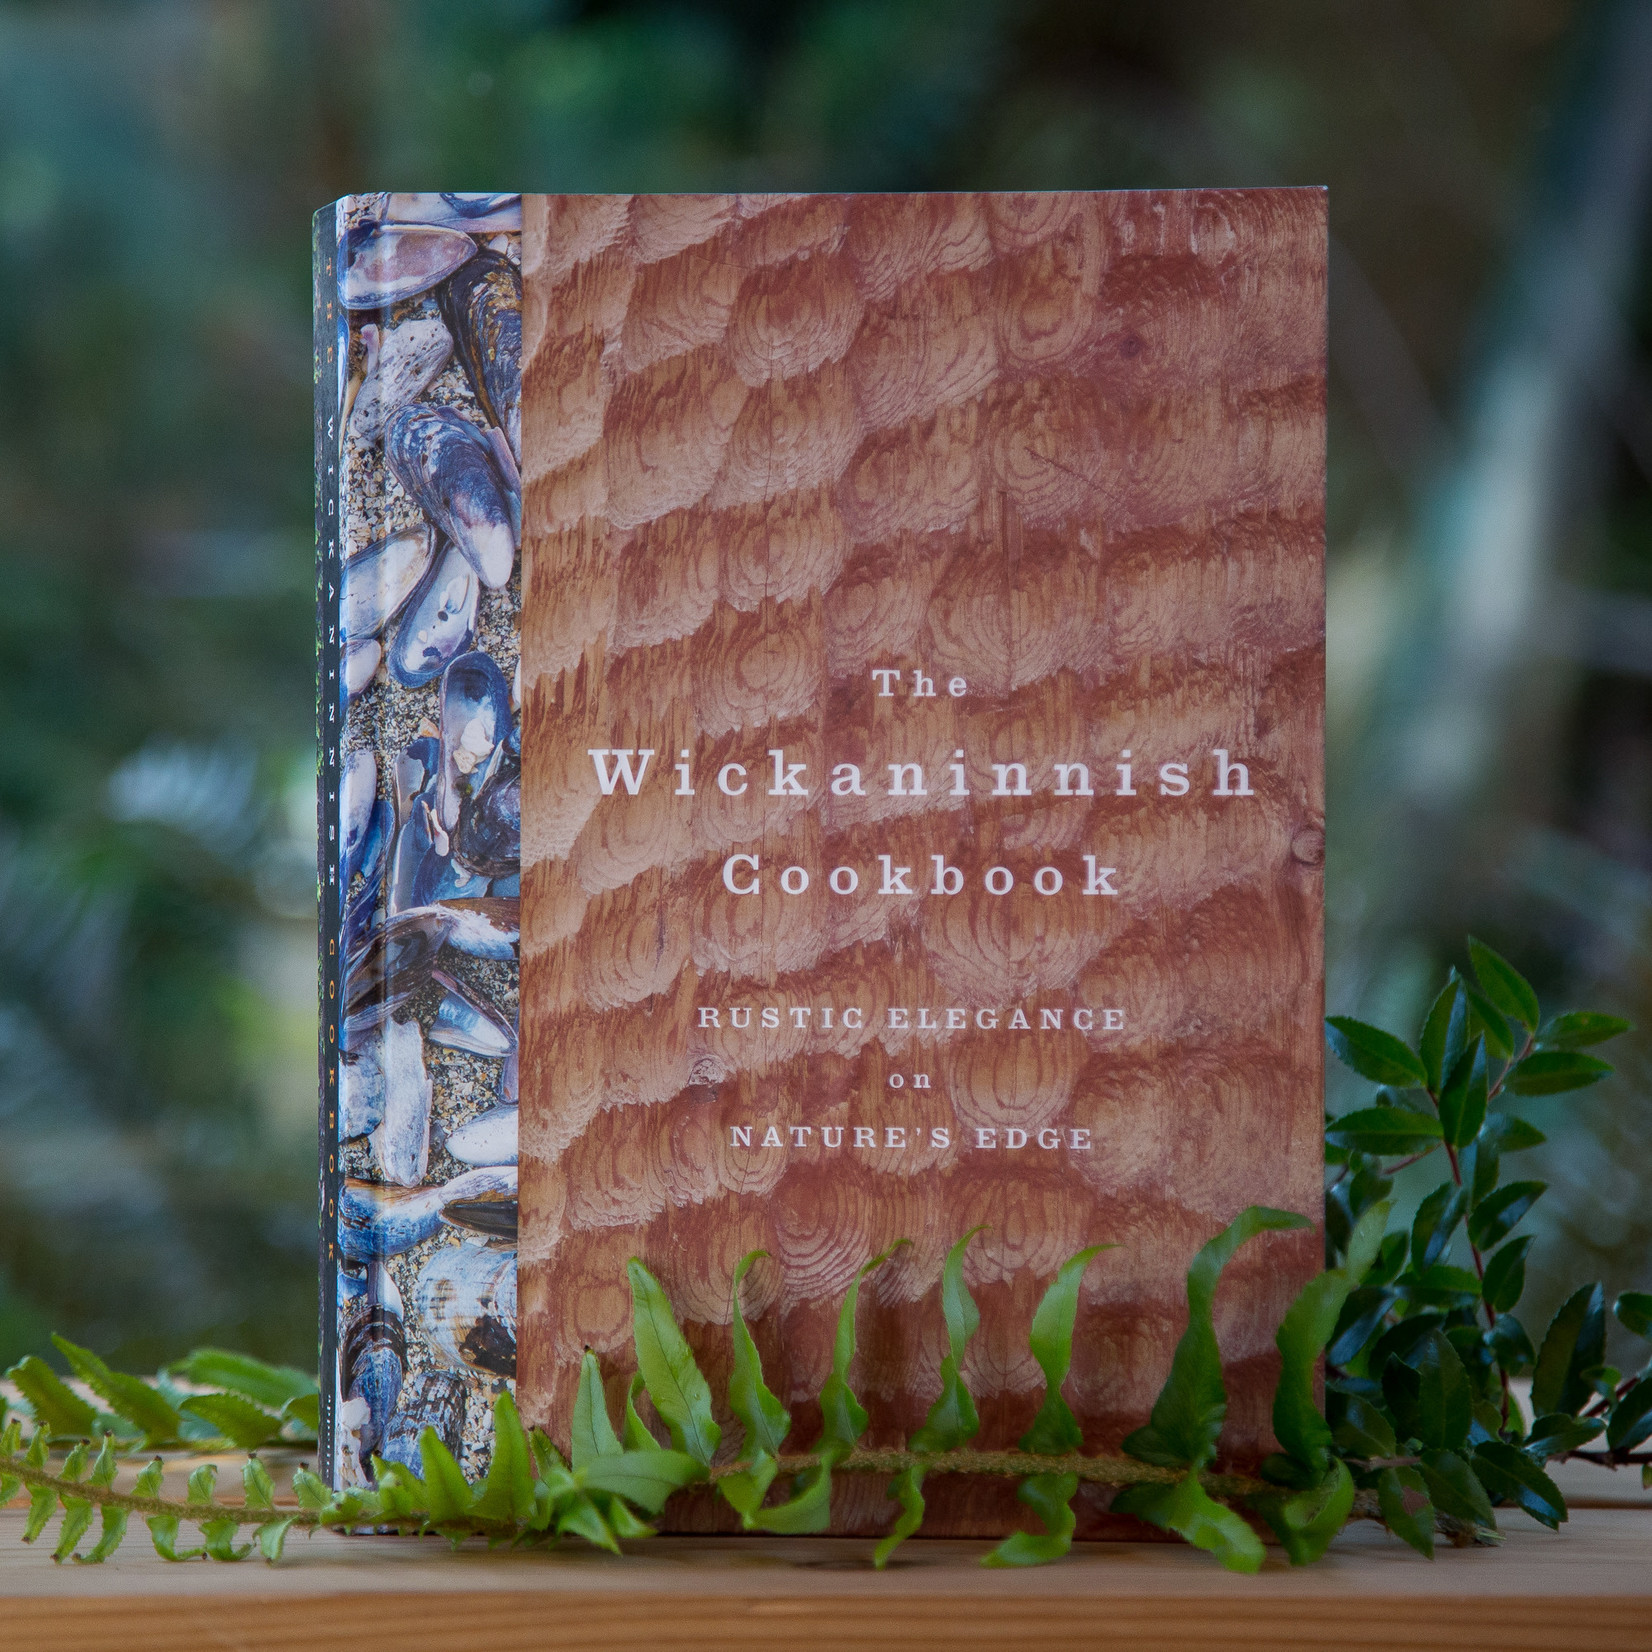 The Wickaninnish Cookbook